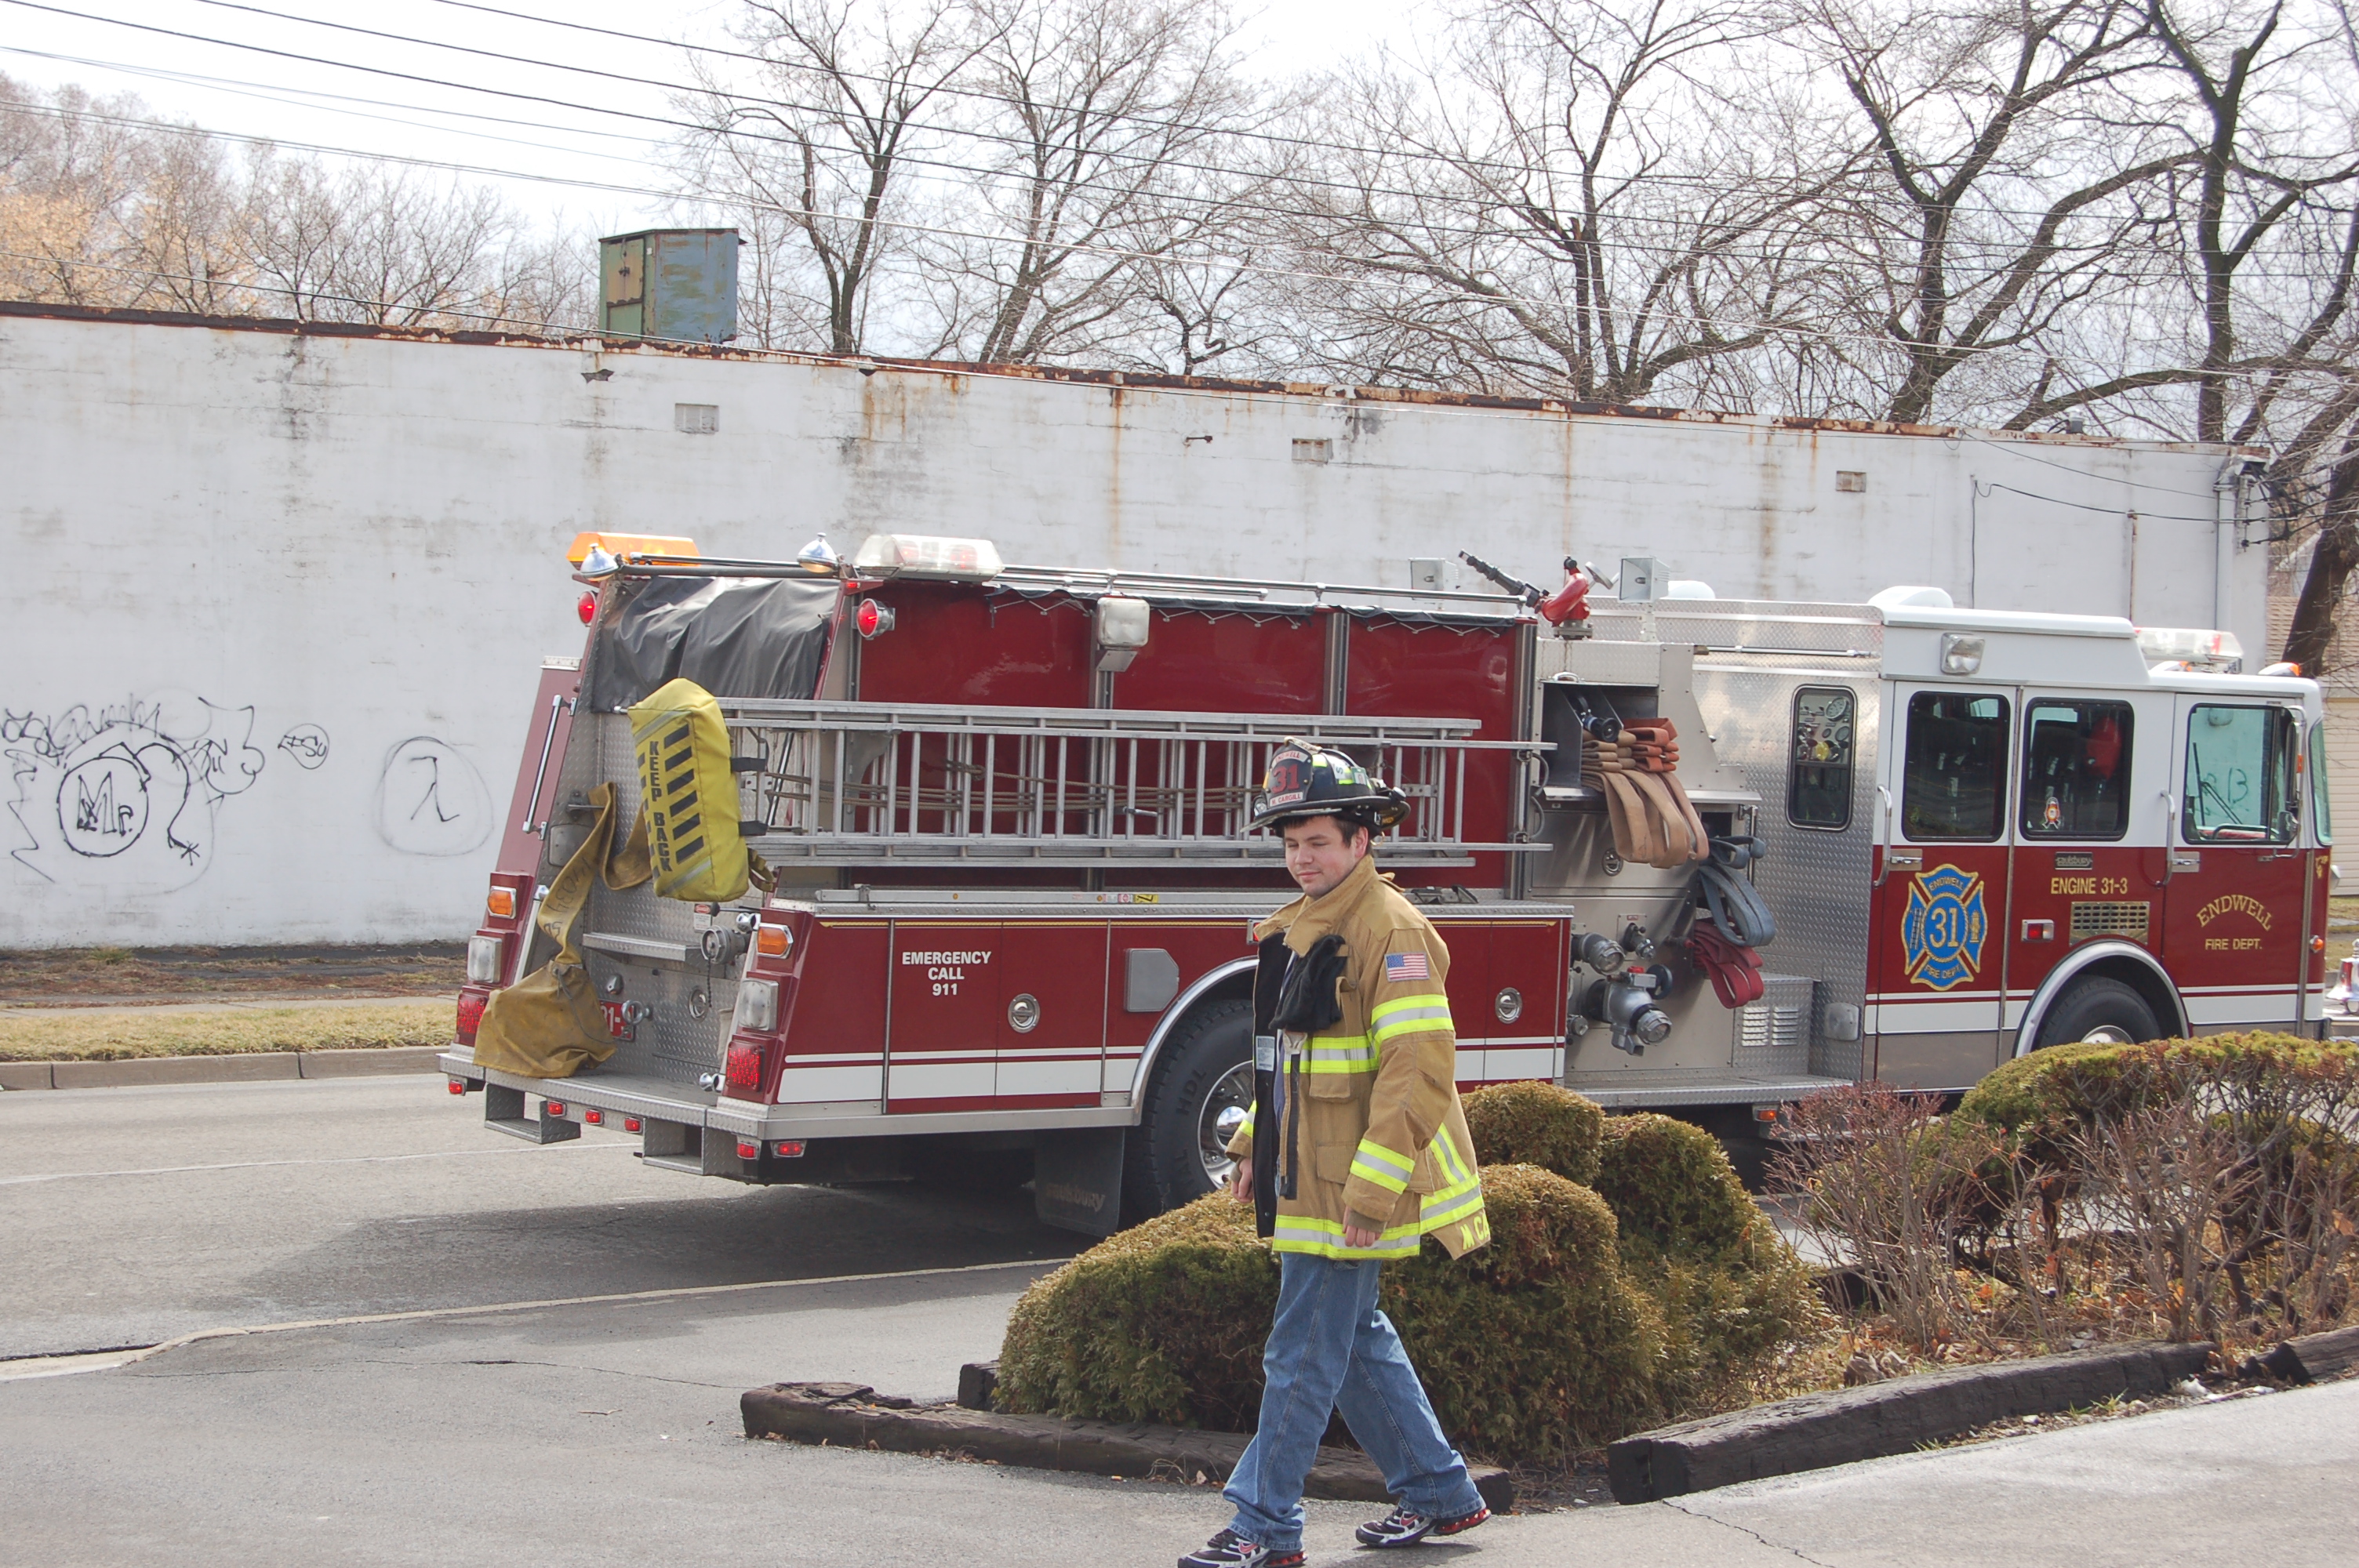 03-19-09  Response - Fire, Laundromat, N. Kelly Ave. & Watson Blvd